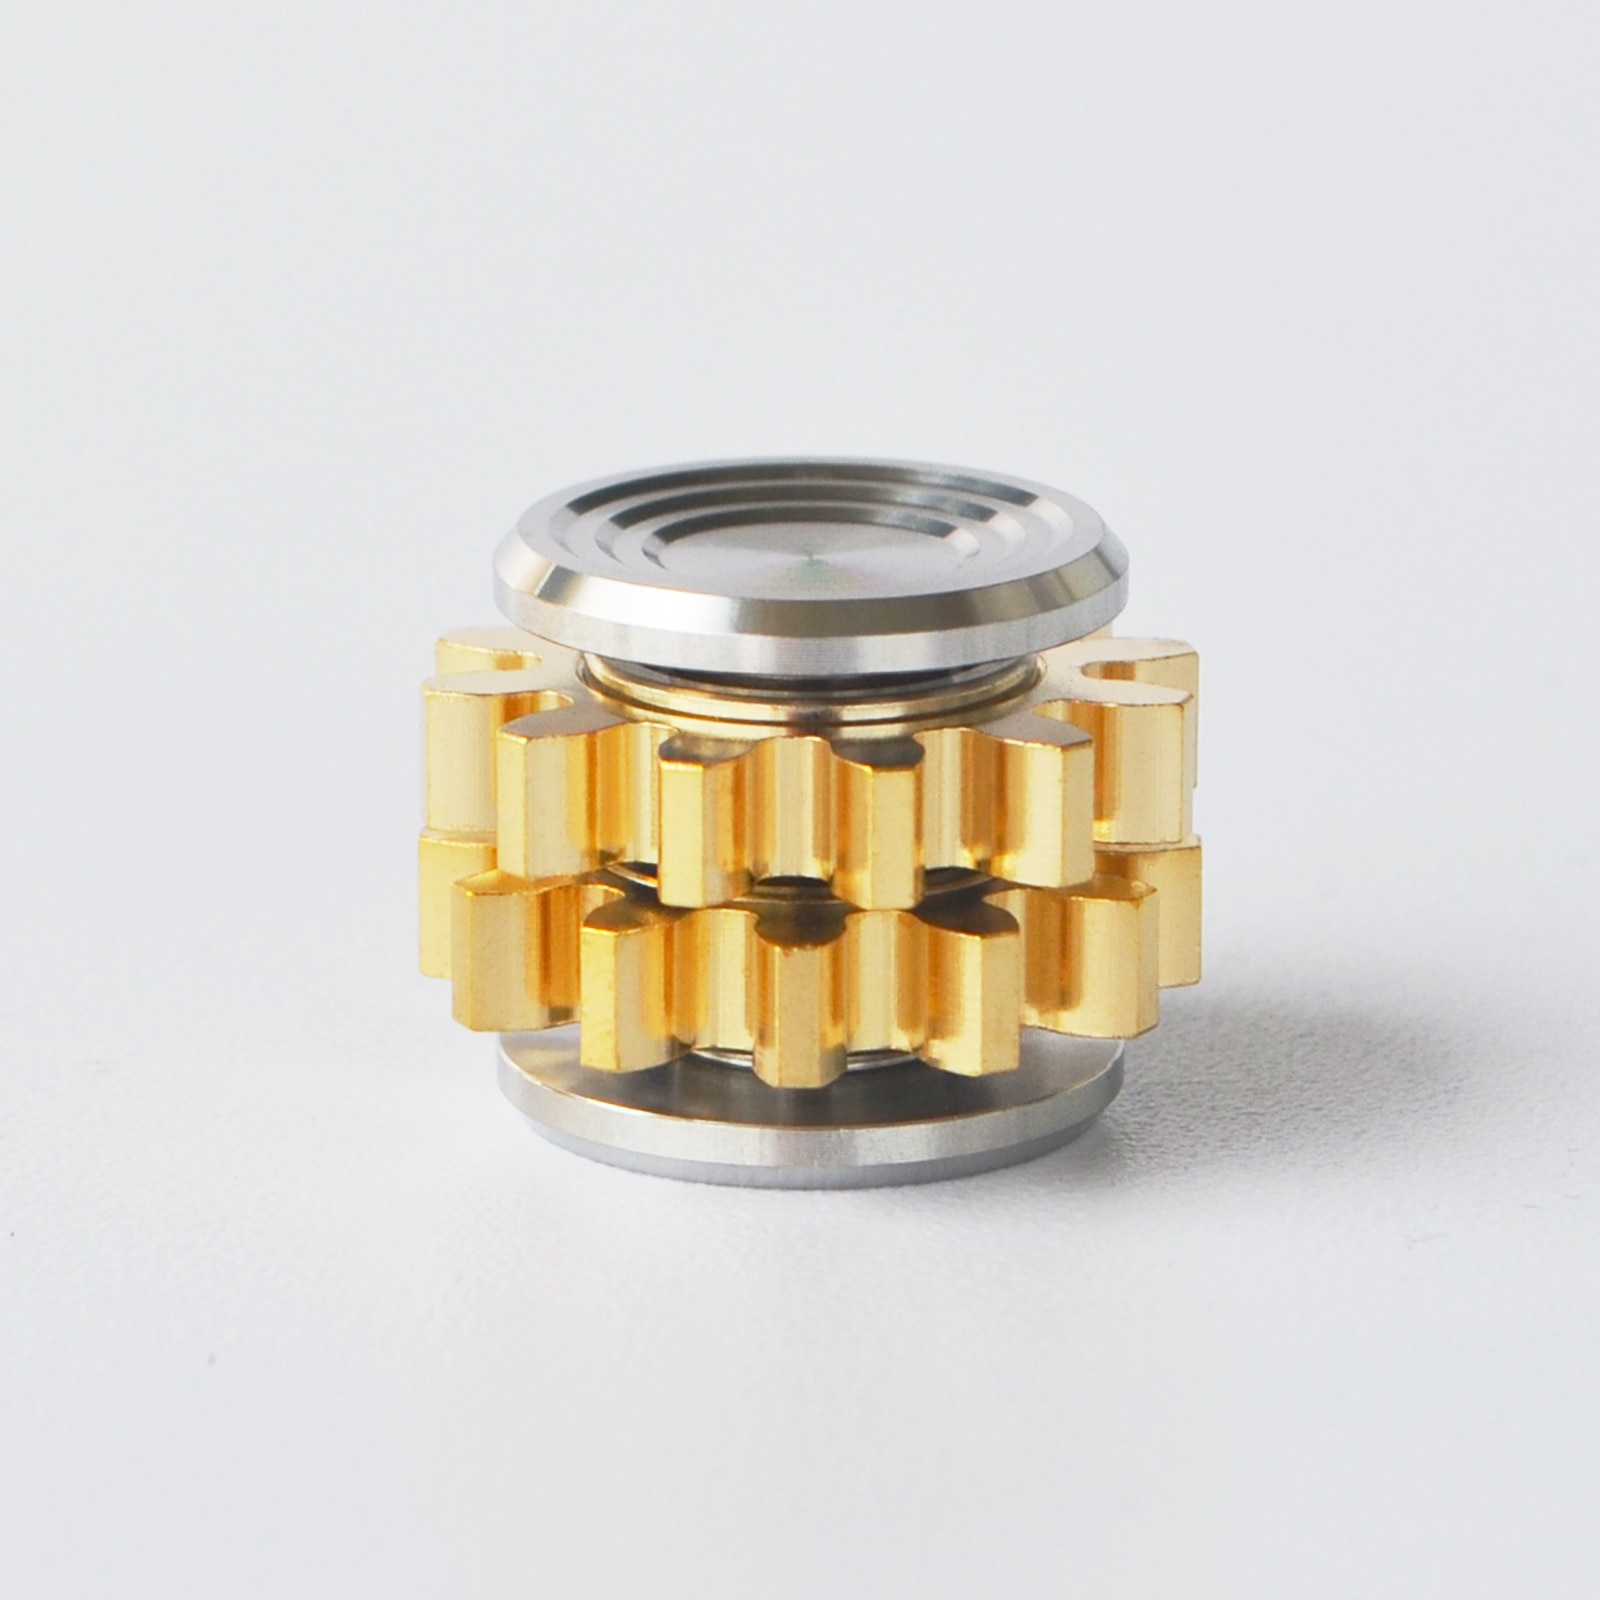 Fingertip Spiner Mini Gear Desktop Toy Metal EDC Gyroscope for Adult Antistress Pressure Relieve Fidget Spinner 5 - Simple Dimple Fidget